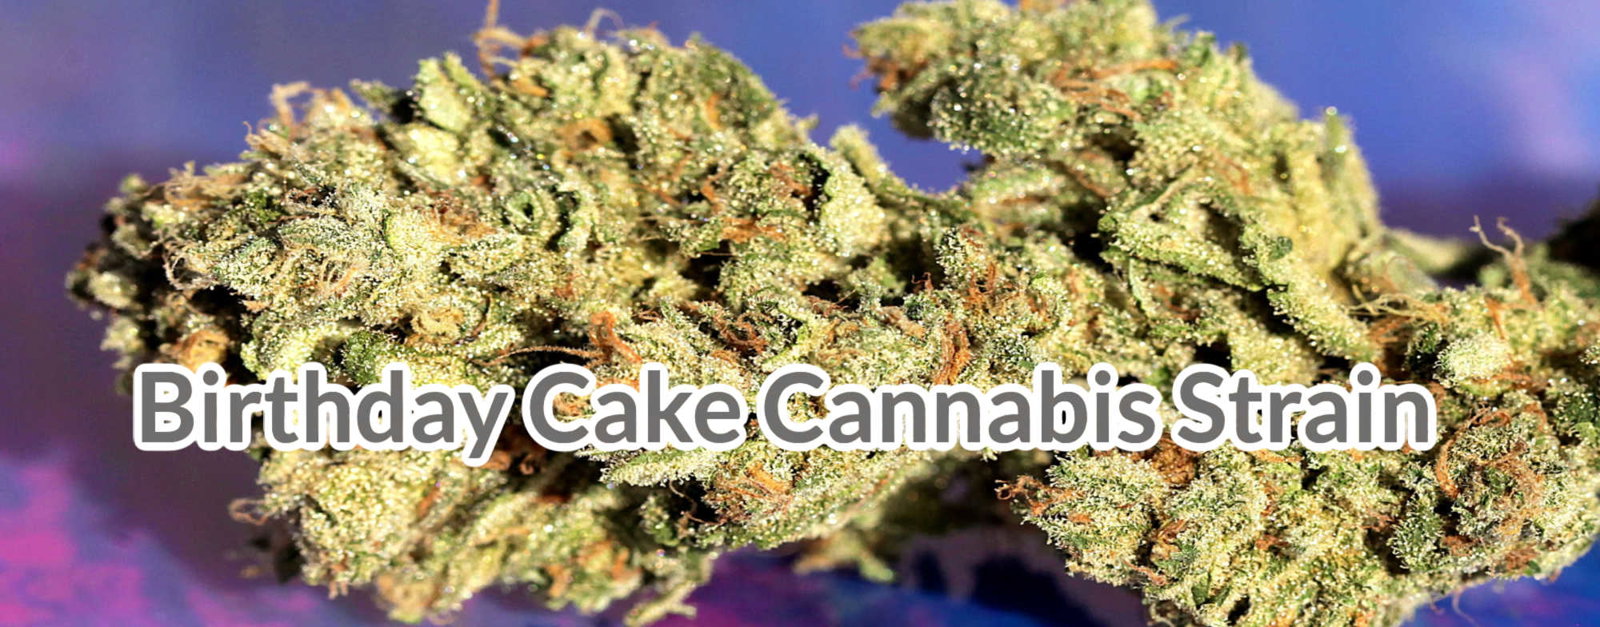 image of Birthday Cake Cannabis Strain